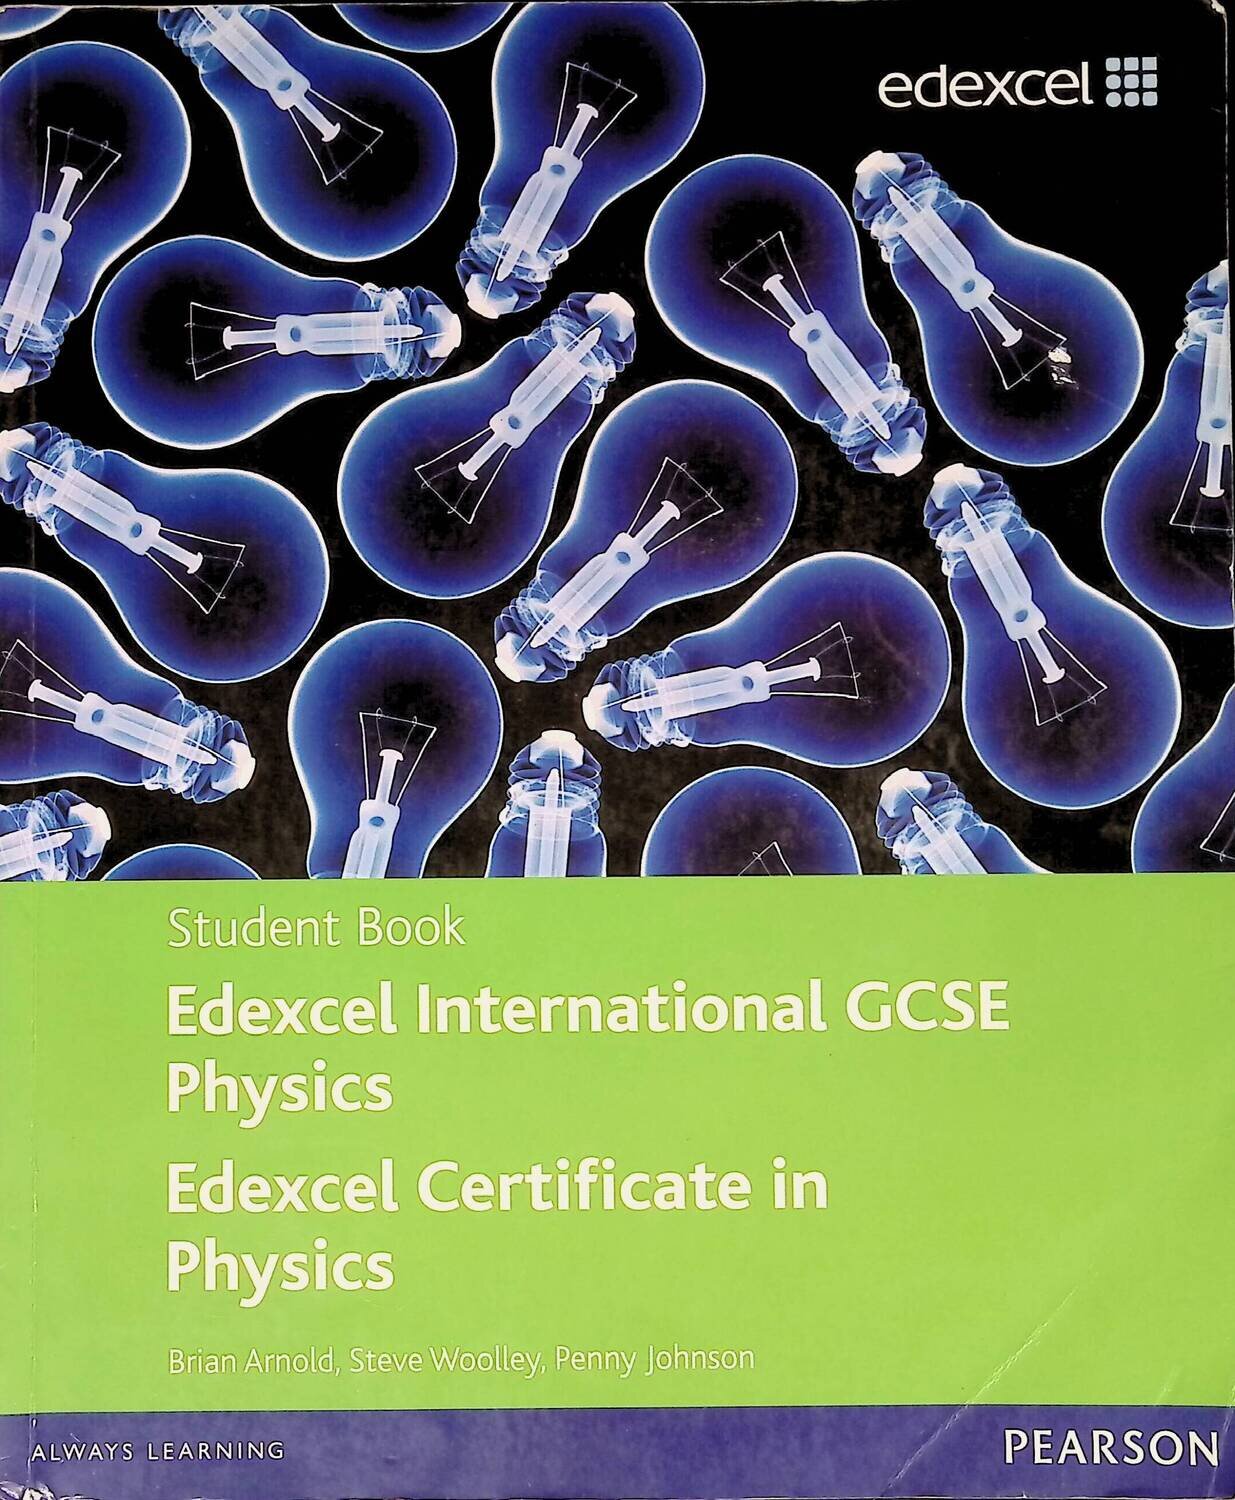 Edexcel International GCSE Physics Student Book (+ CD); Arnold Brian, Woolley Steve, Johnson Penny